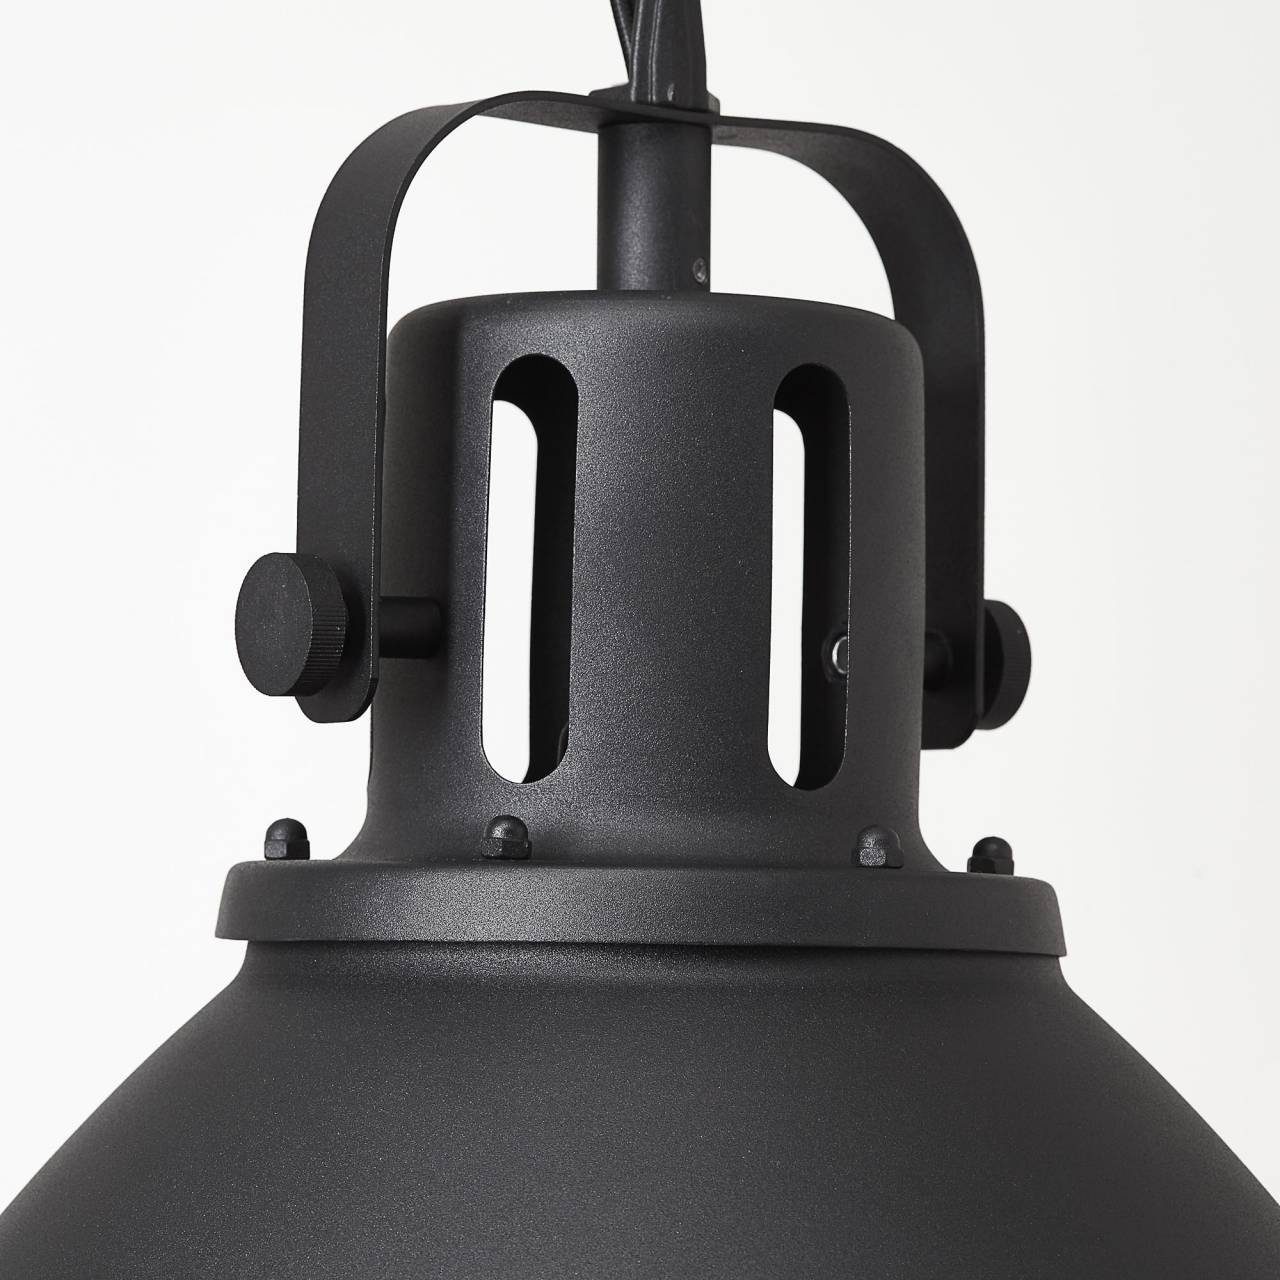 Brilliant Pendelleuchte schwarz Jesper Jesper, Pendelleuchte 47cm 1x A60, 60W, geeig E27, Lampe Glas